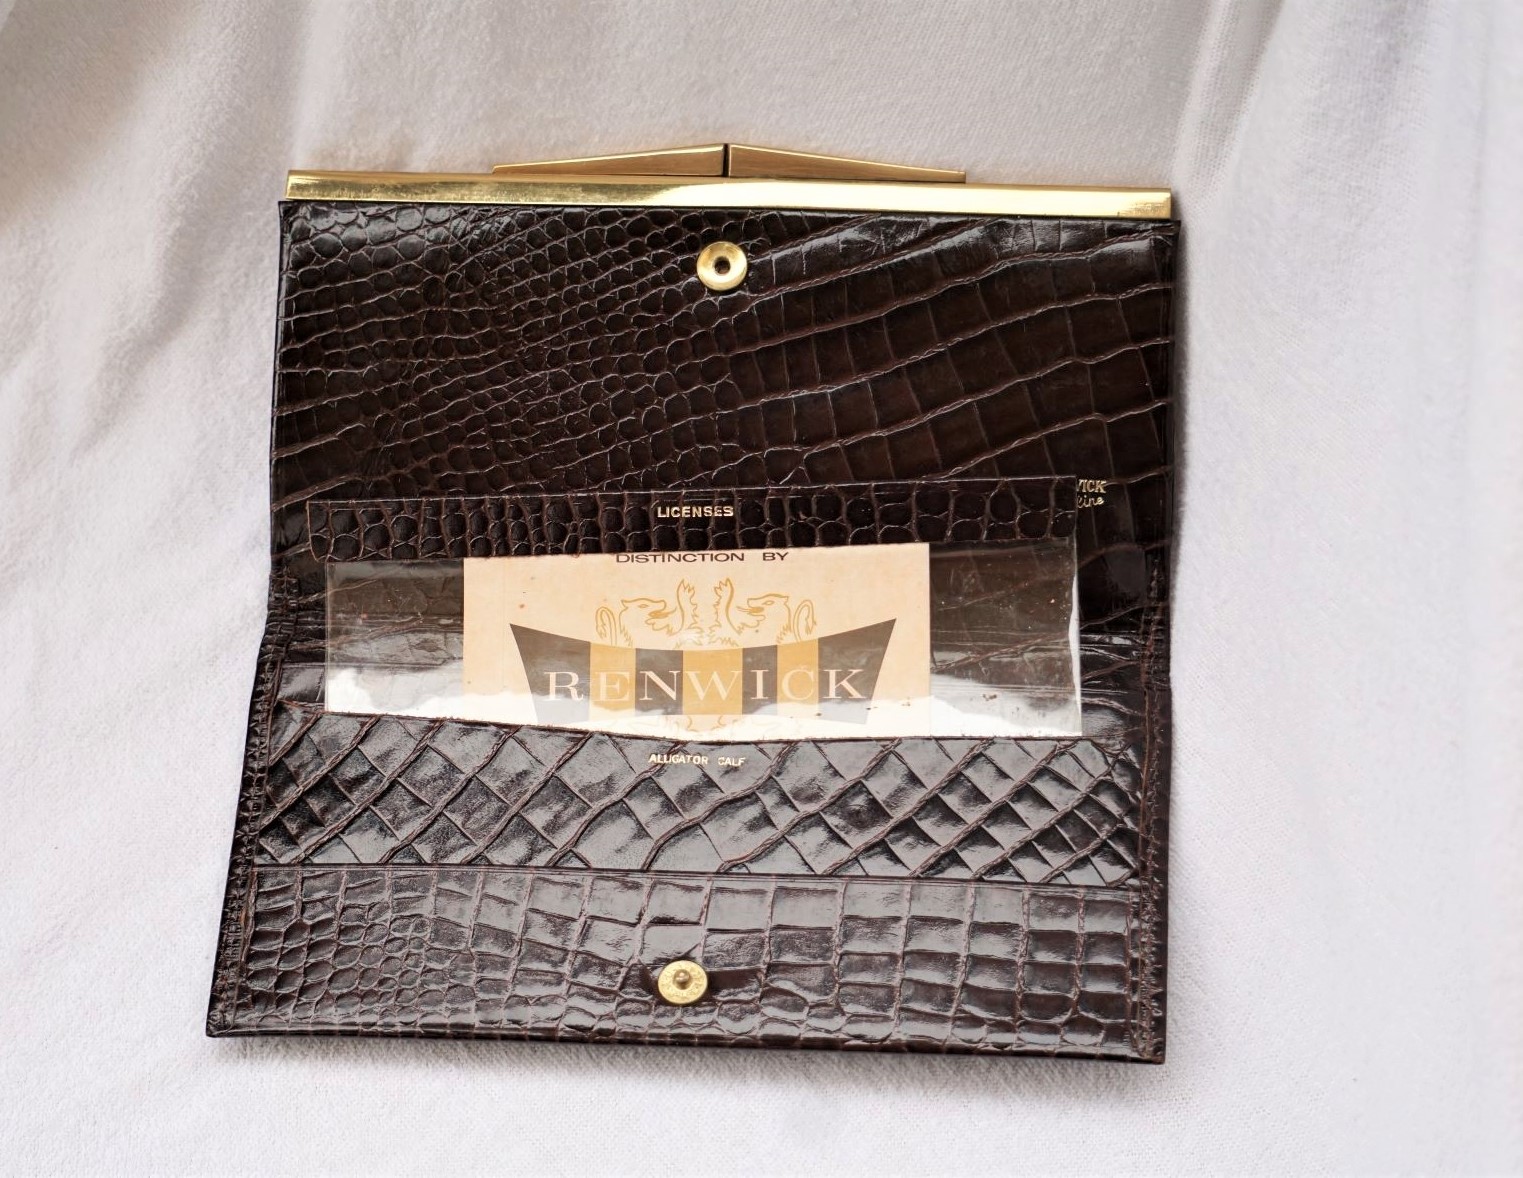 Alligator leather wallet by Renwick 1